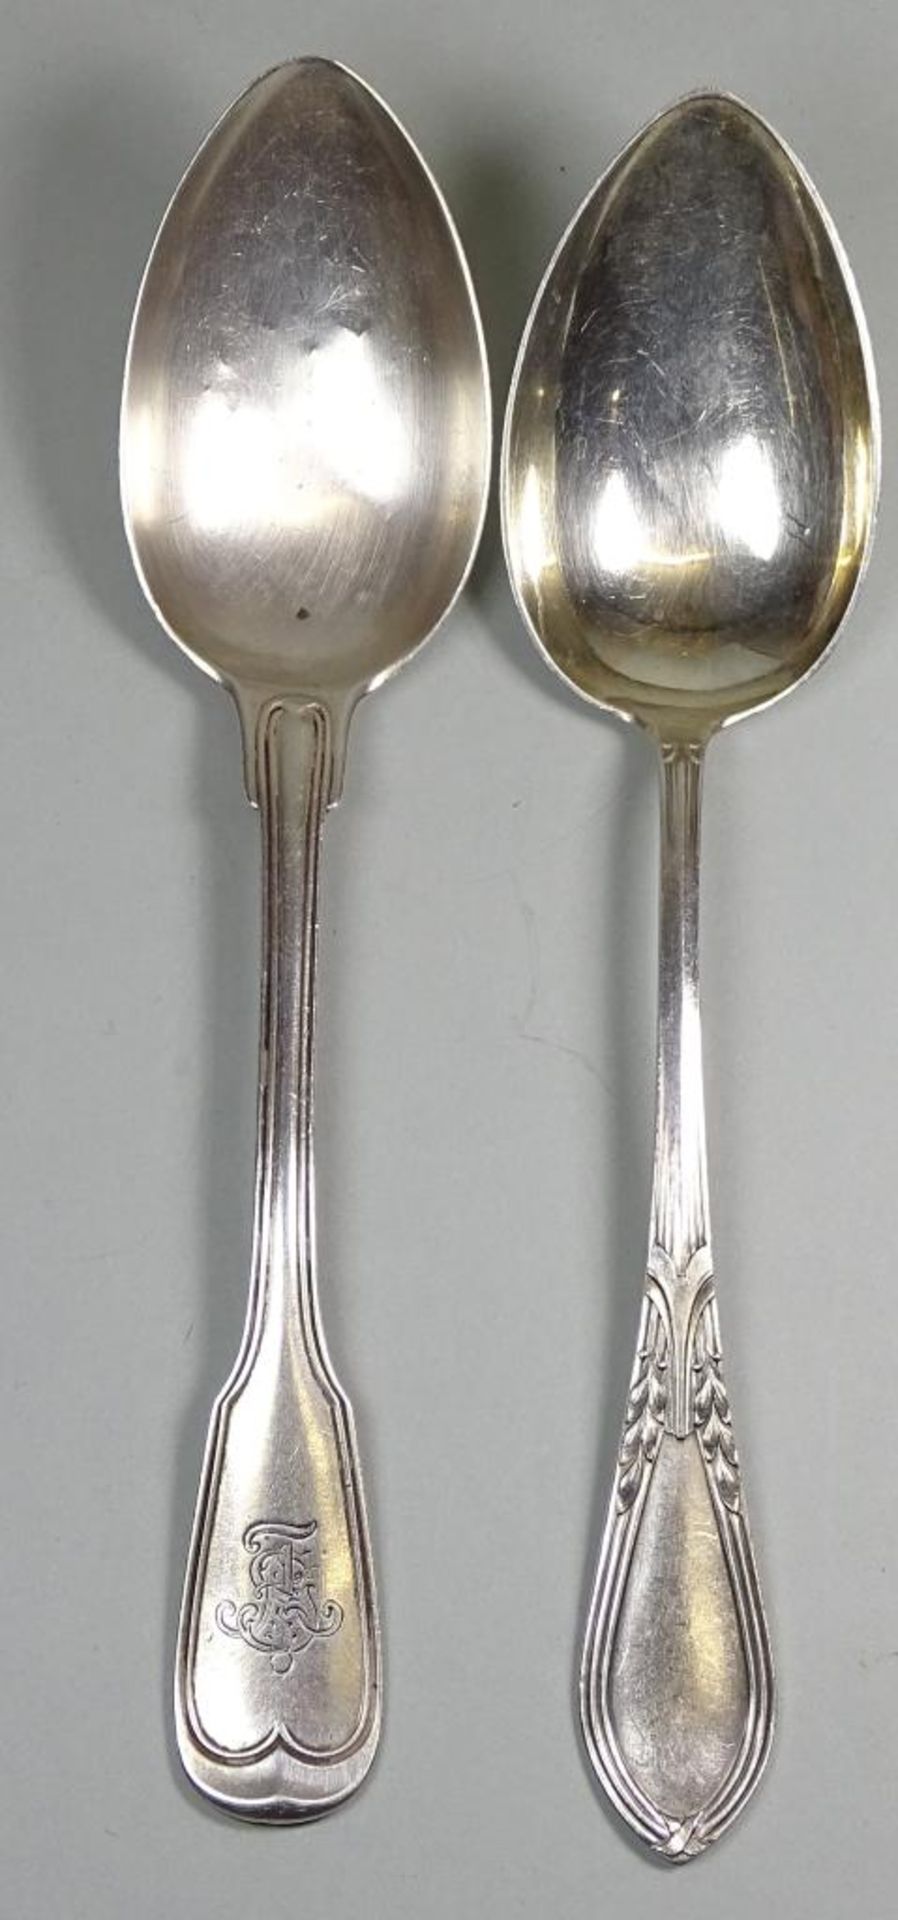 Zwei Esslöffel,Silber, ges.Gew. 121gr.L- 21,5cm,1x Augsburger Faden,Monogrammiert, 1x datiert 190